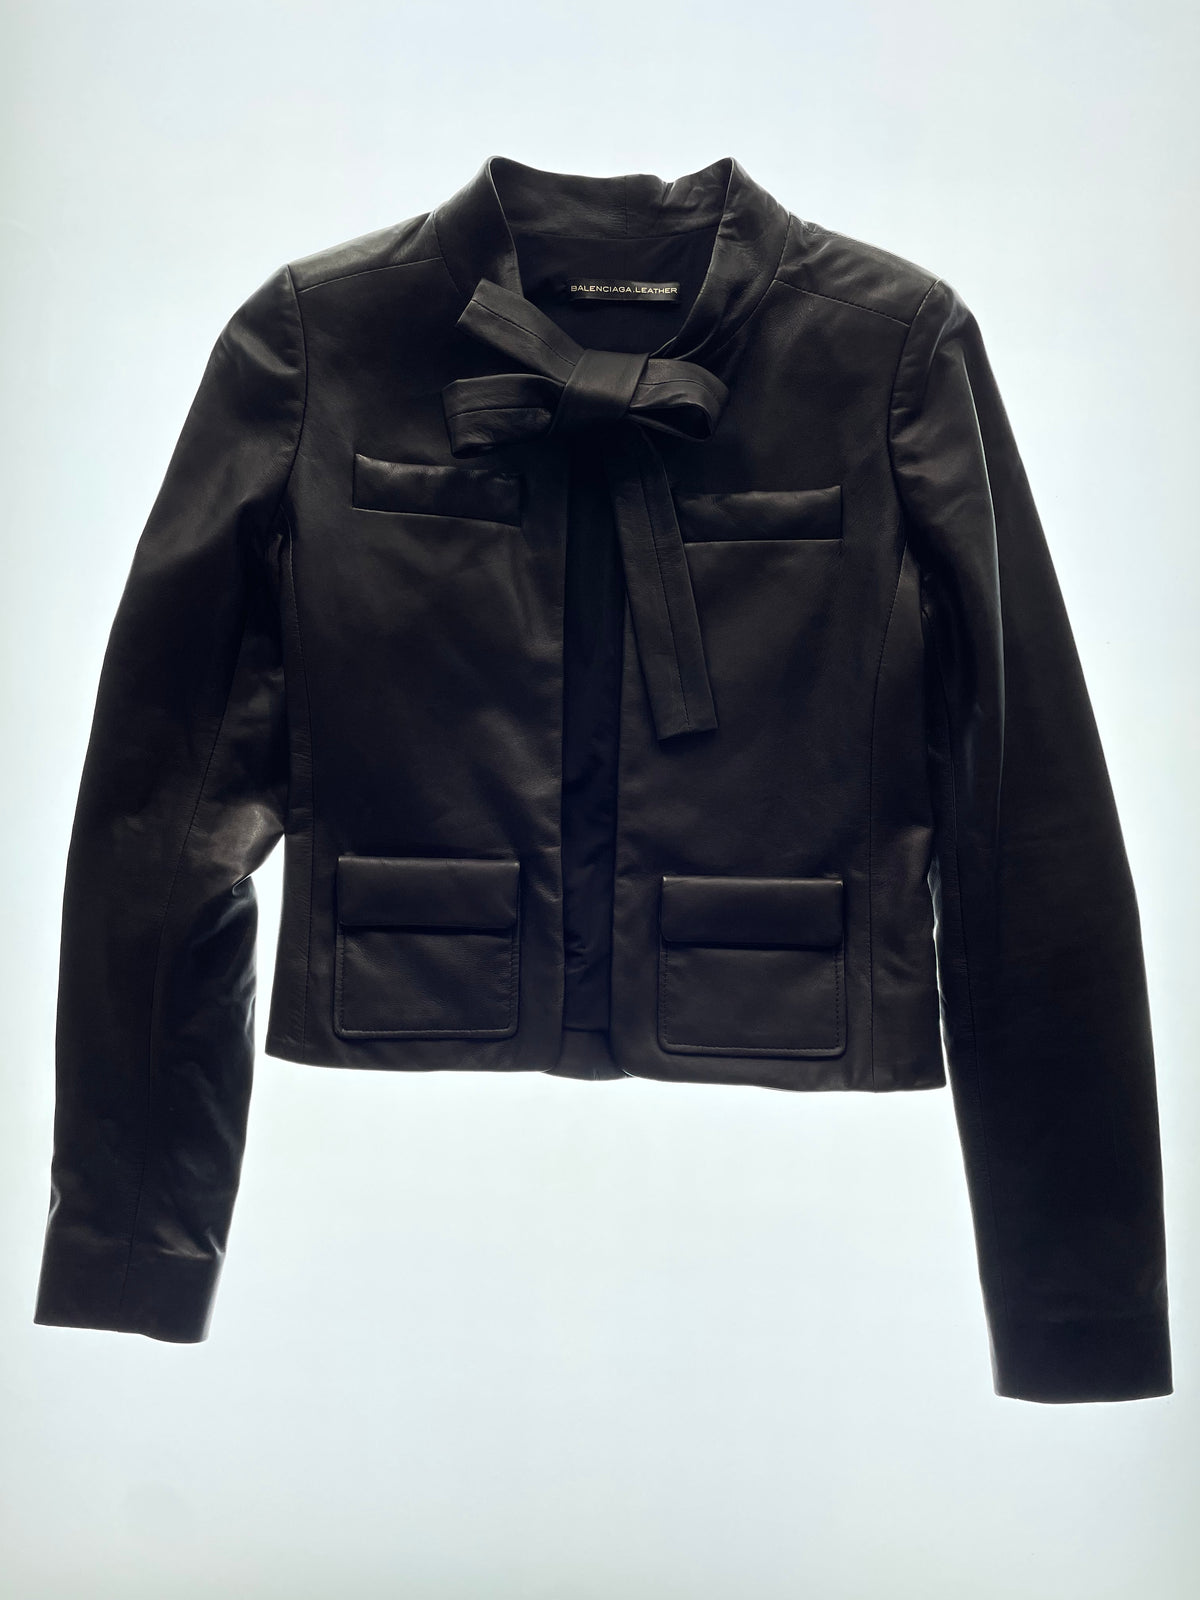 FW 07 Black Leather Tie Jacket